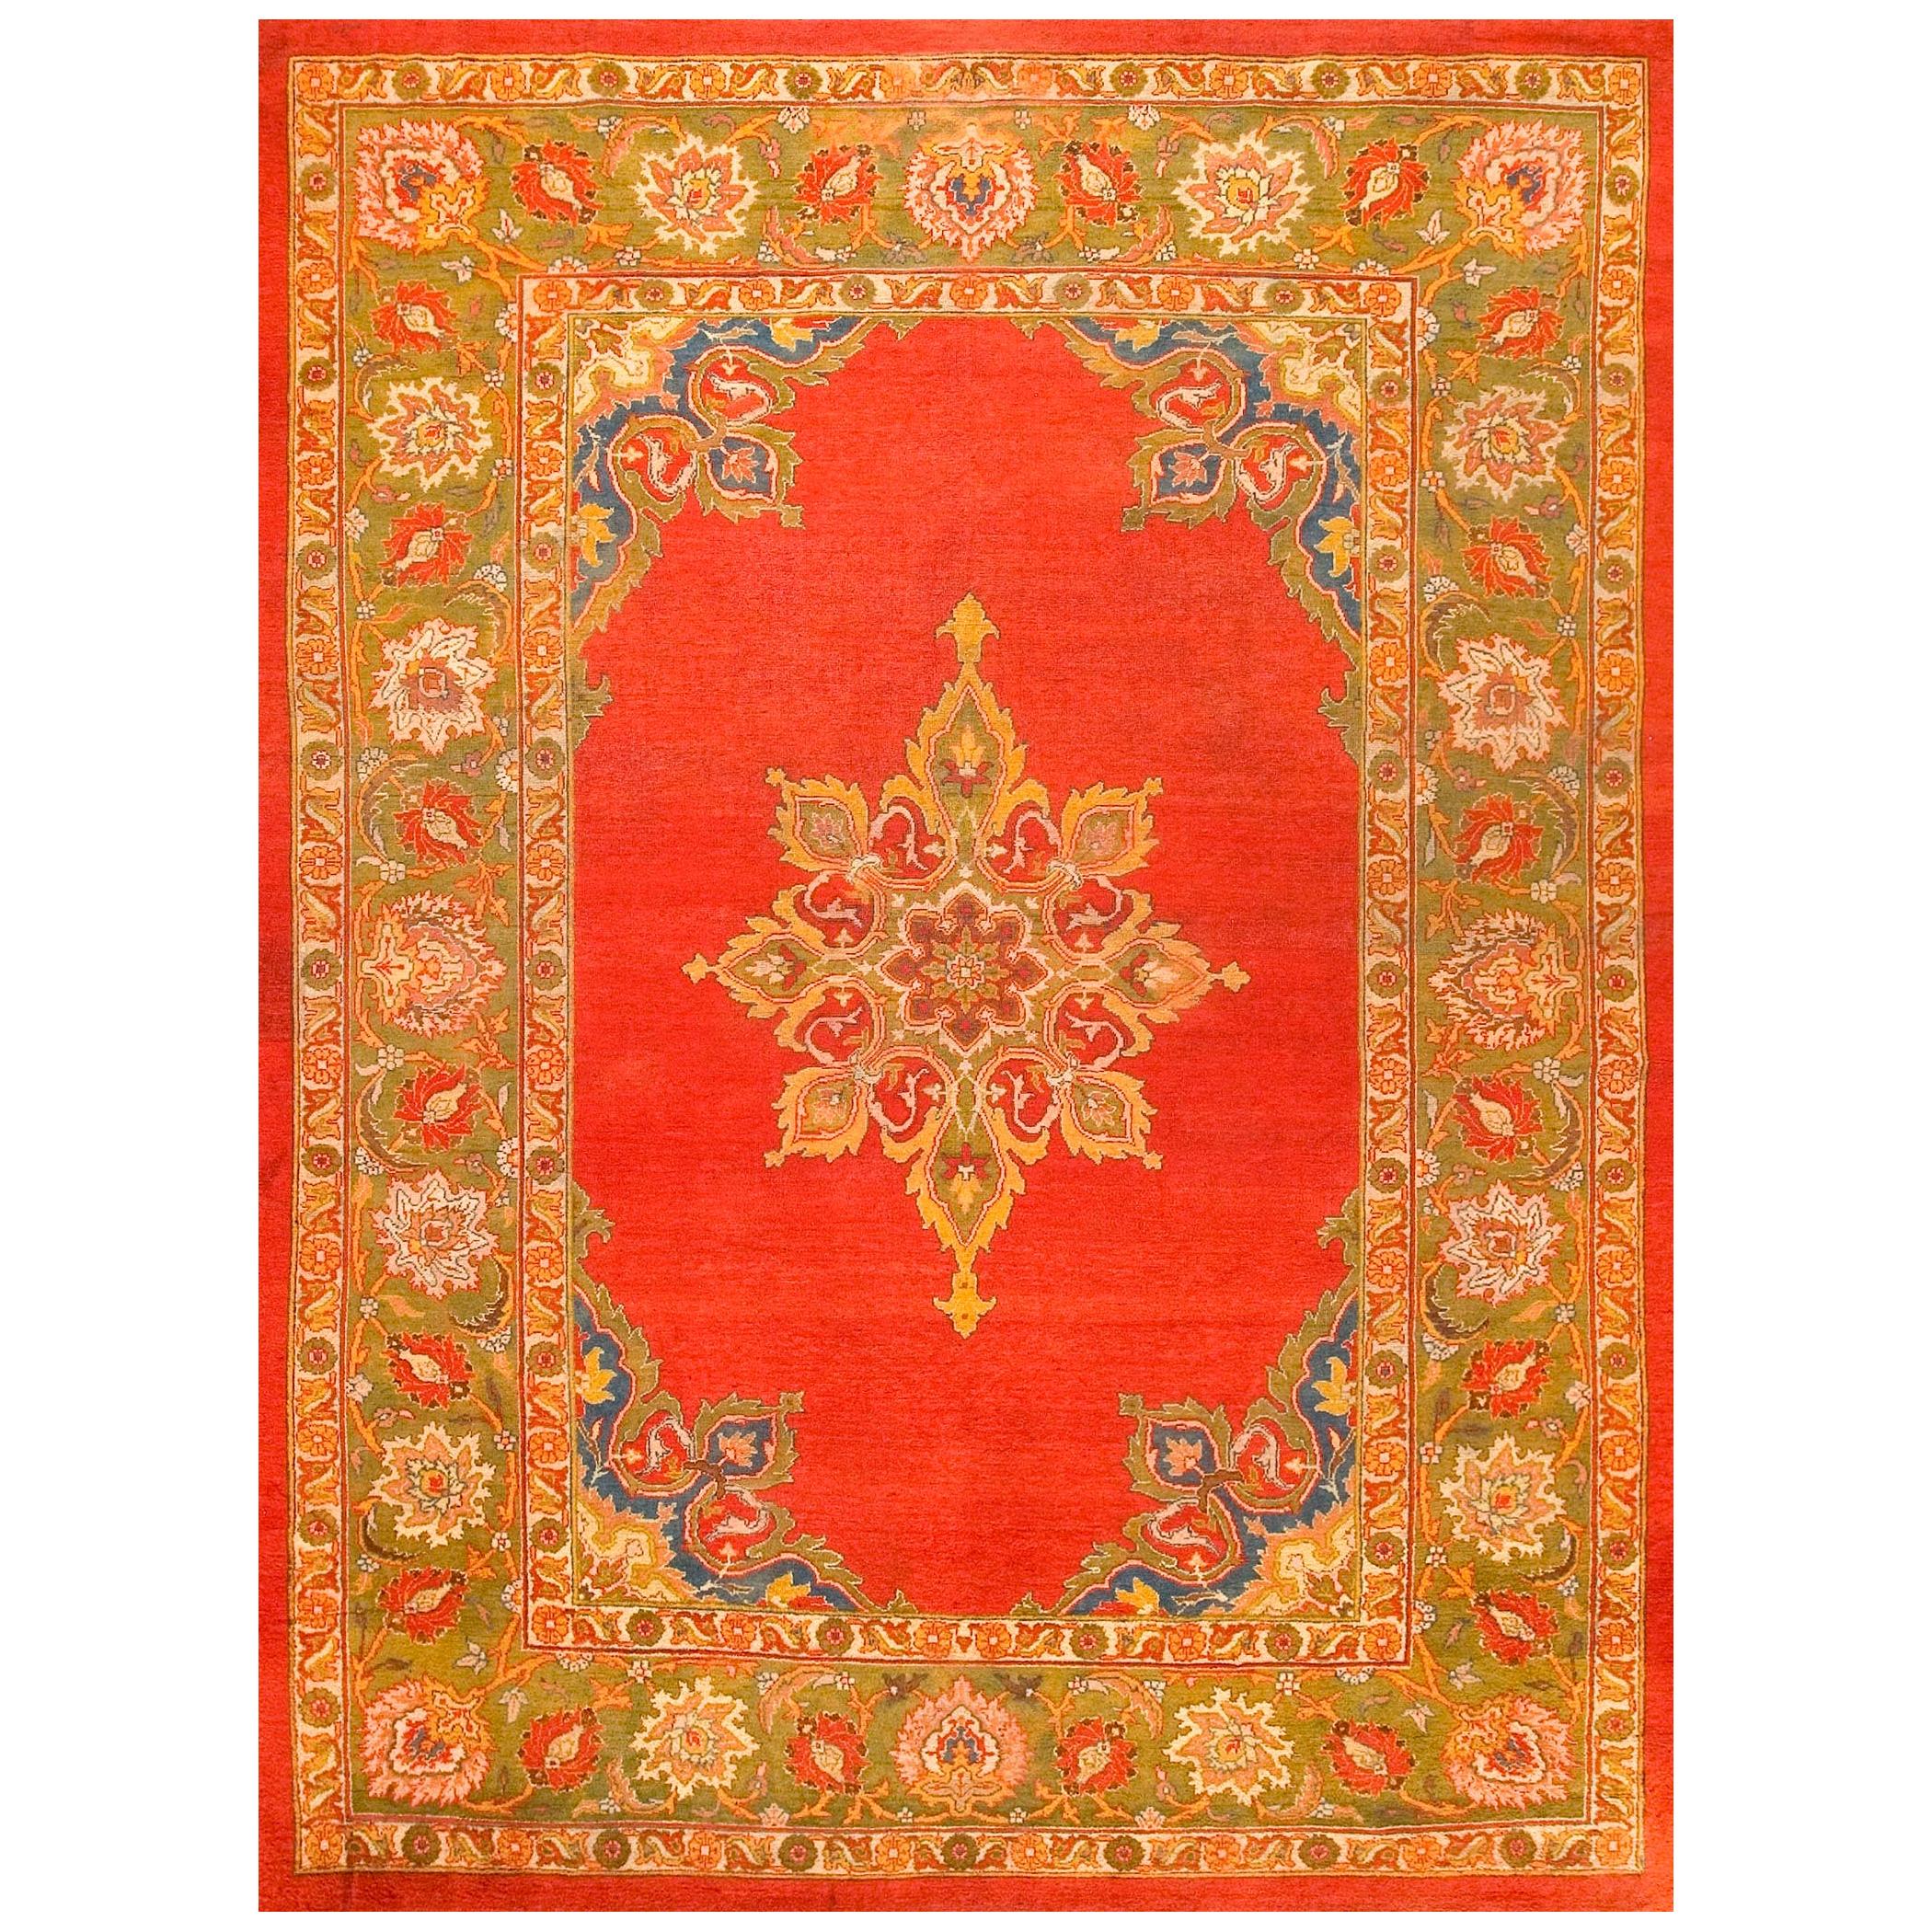 Early 20th Century N. Indian Amritsar Carpet ( 9' x 12' - 275 x 365 )